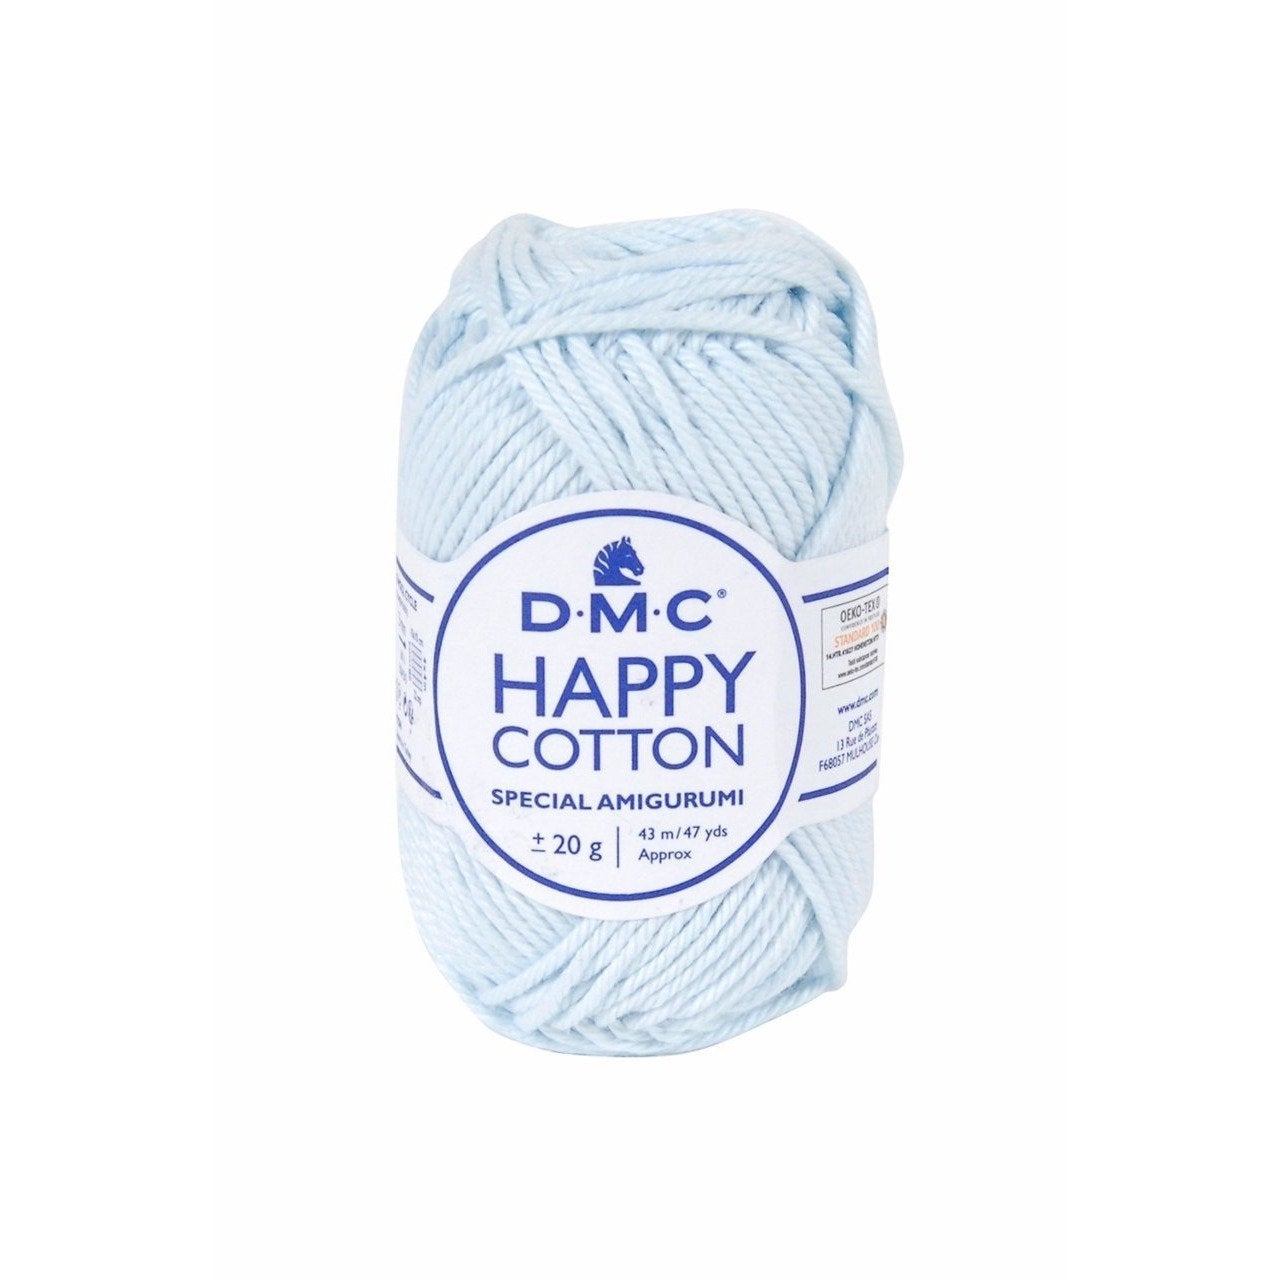 DMC Happy Cotton - Bath Time